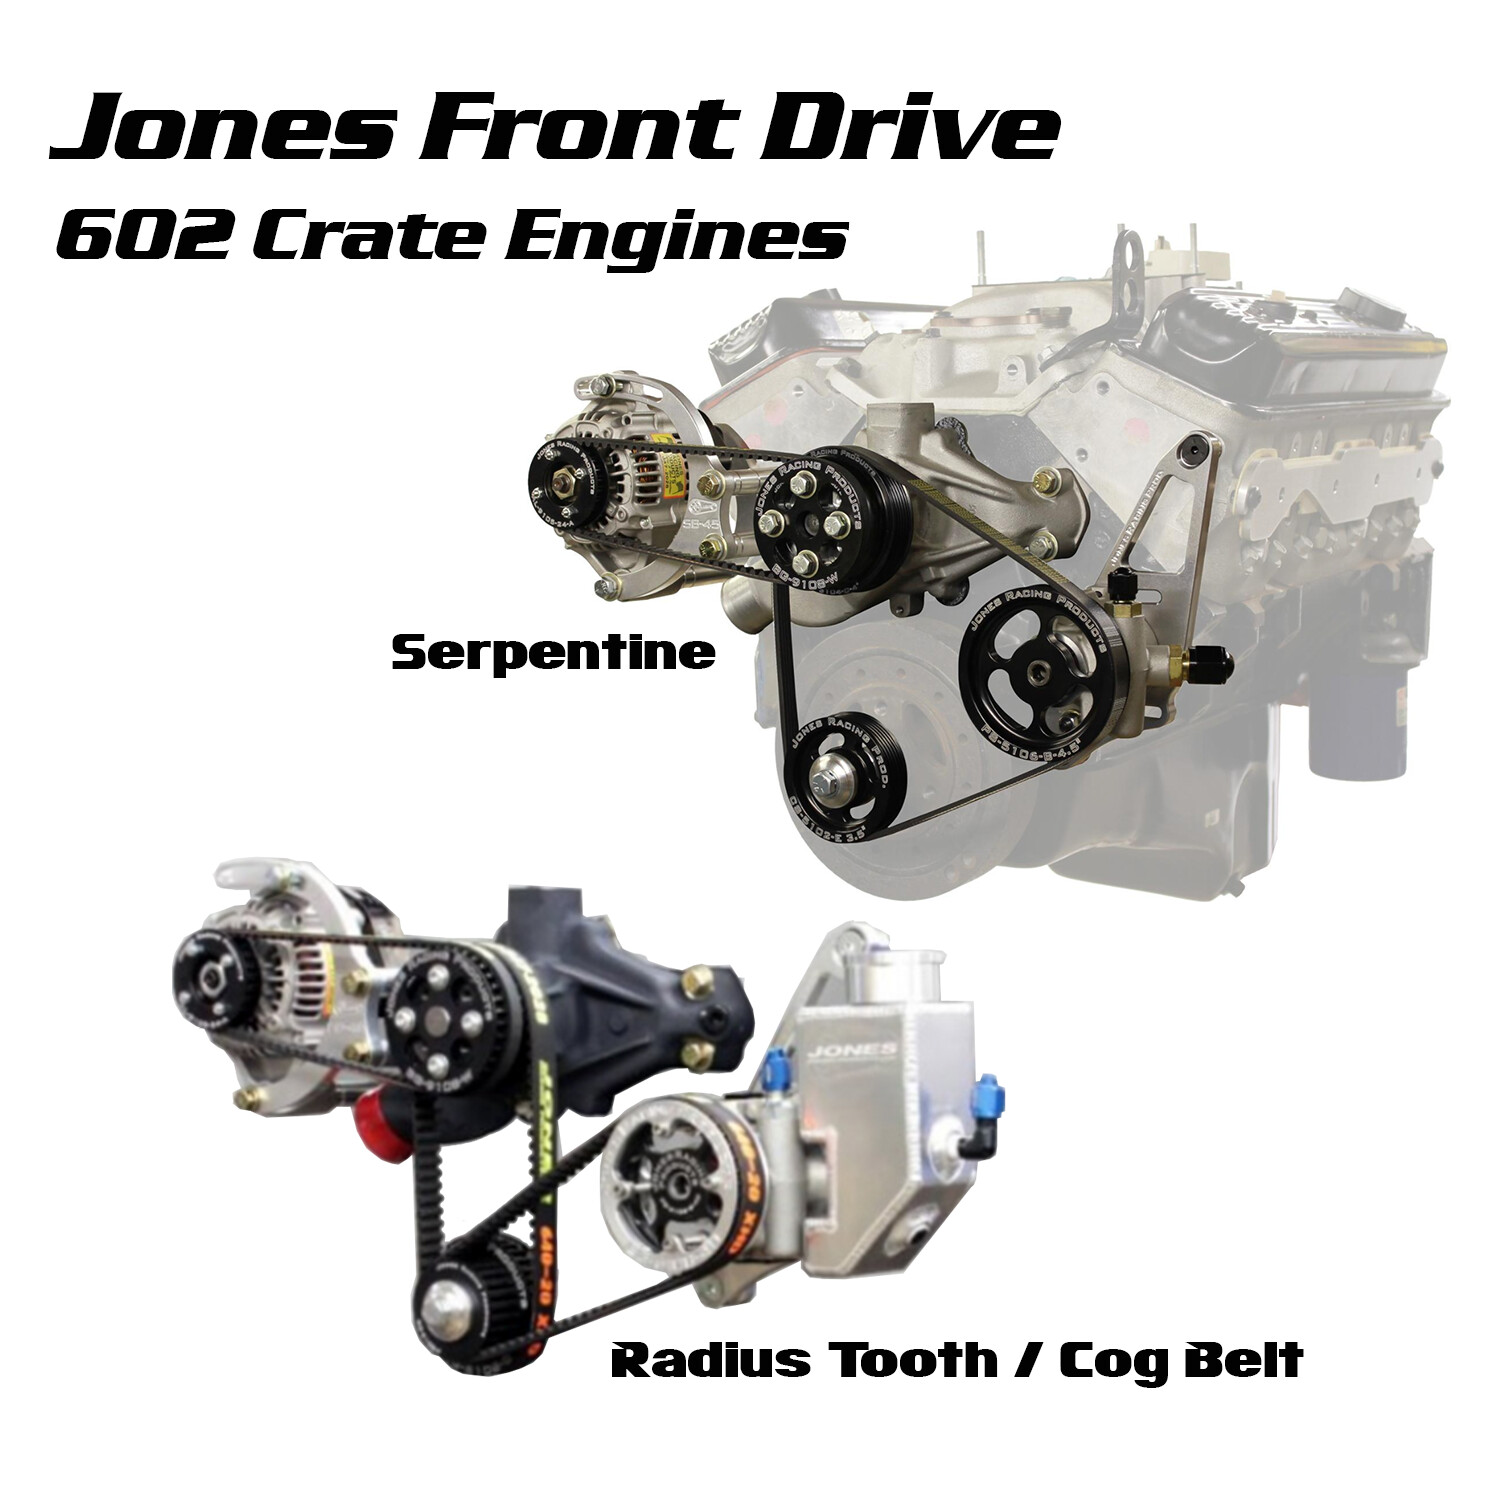 Jones Front Drive Kits